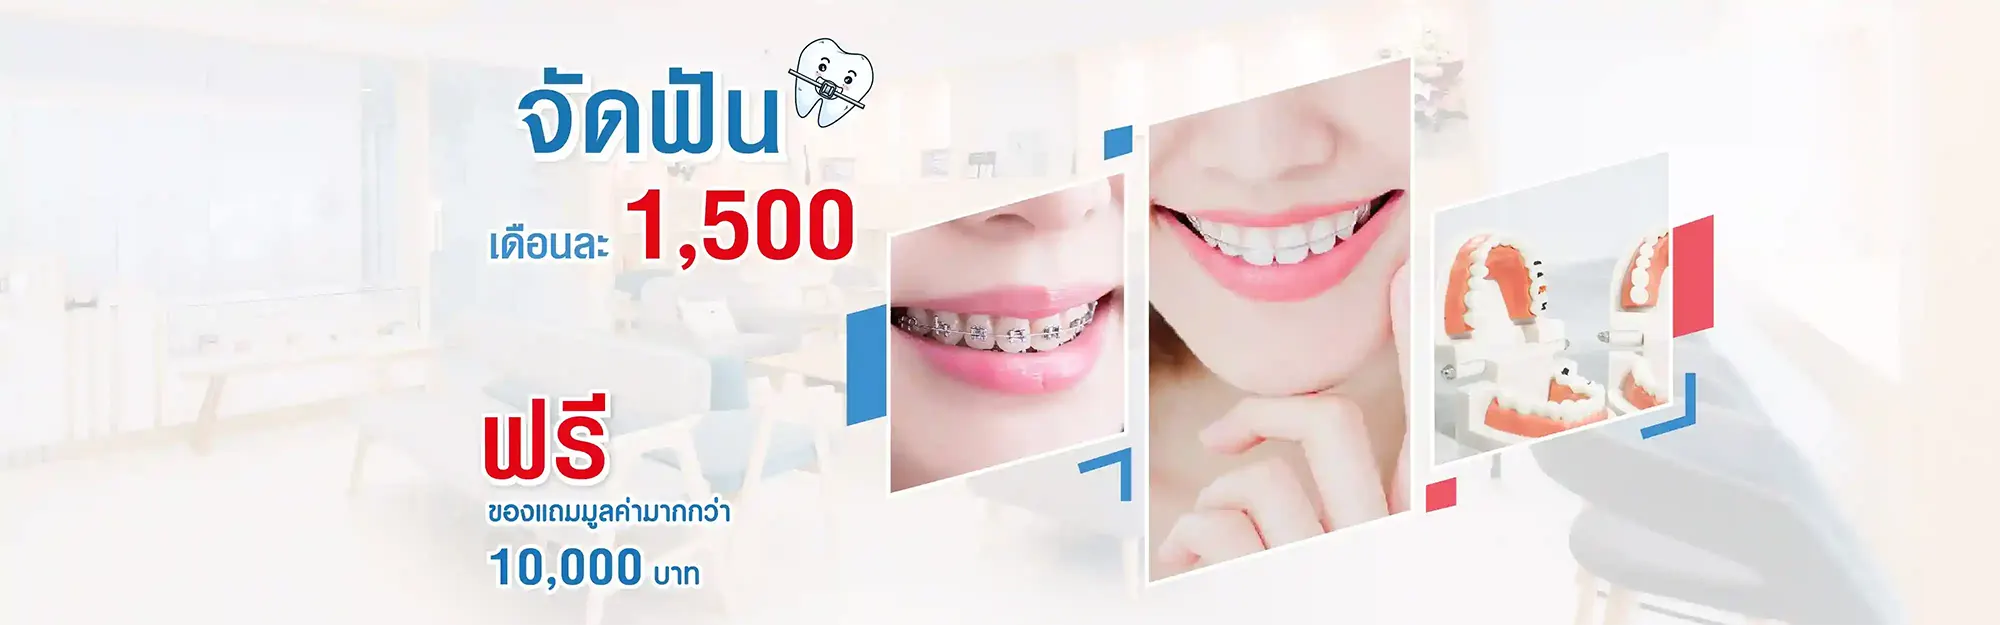 main-โปรจัดฟัน1500-01-1